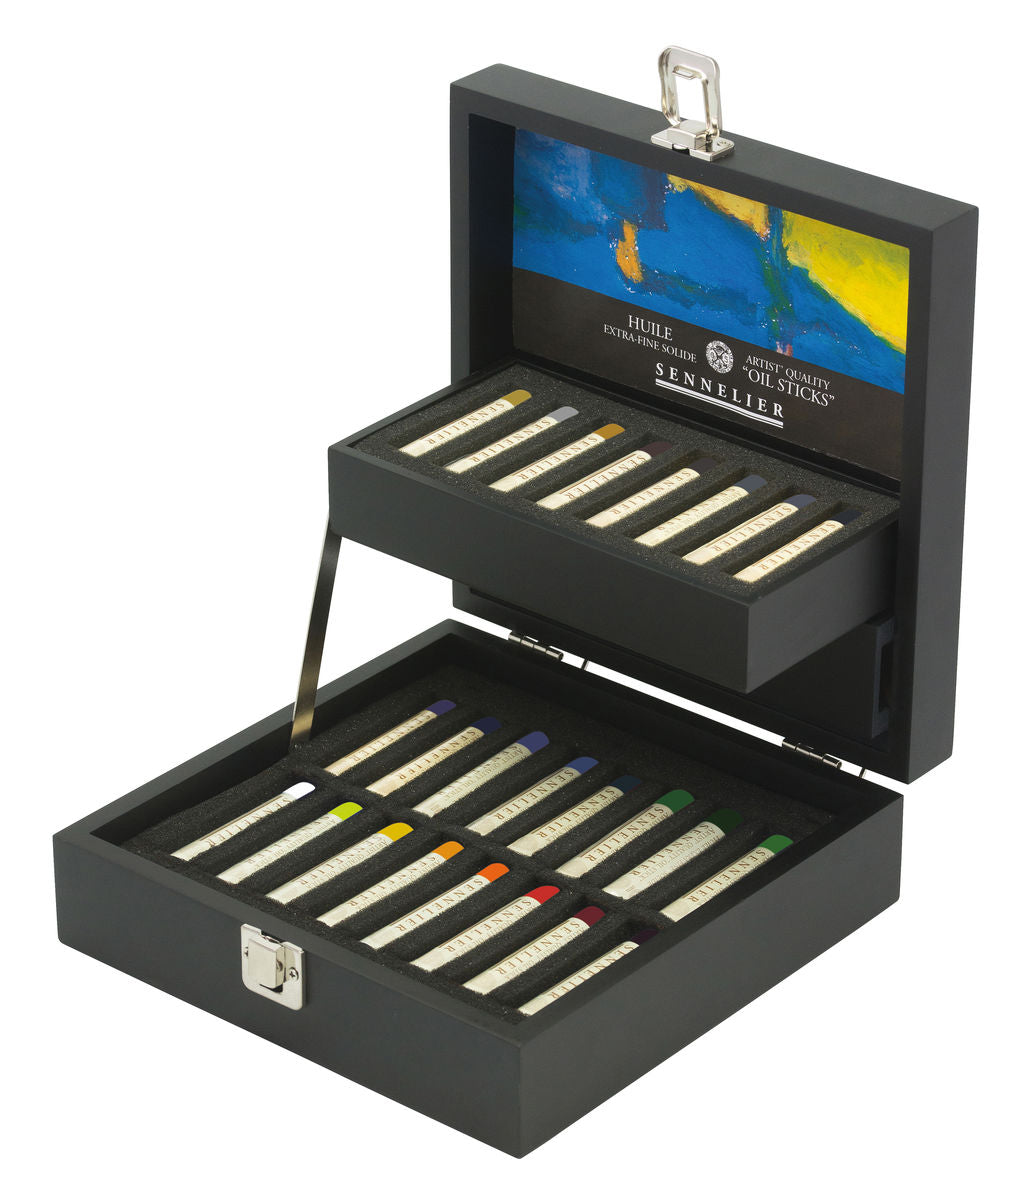 Sennelier Black wooden box set of 24 mini oil sticks - Melbourne Etching Supplies